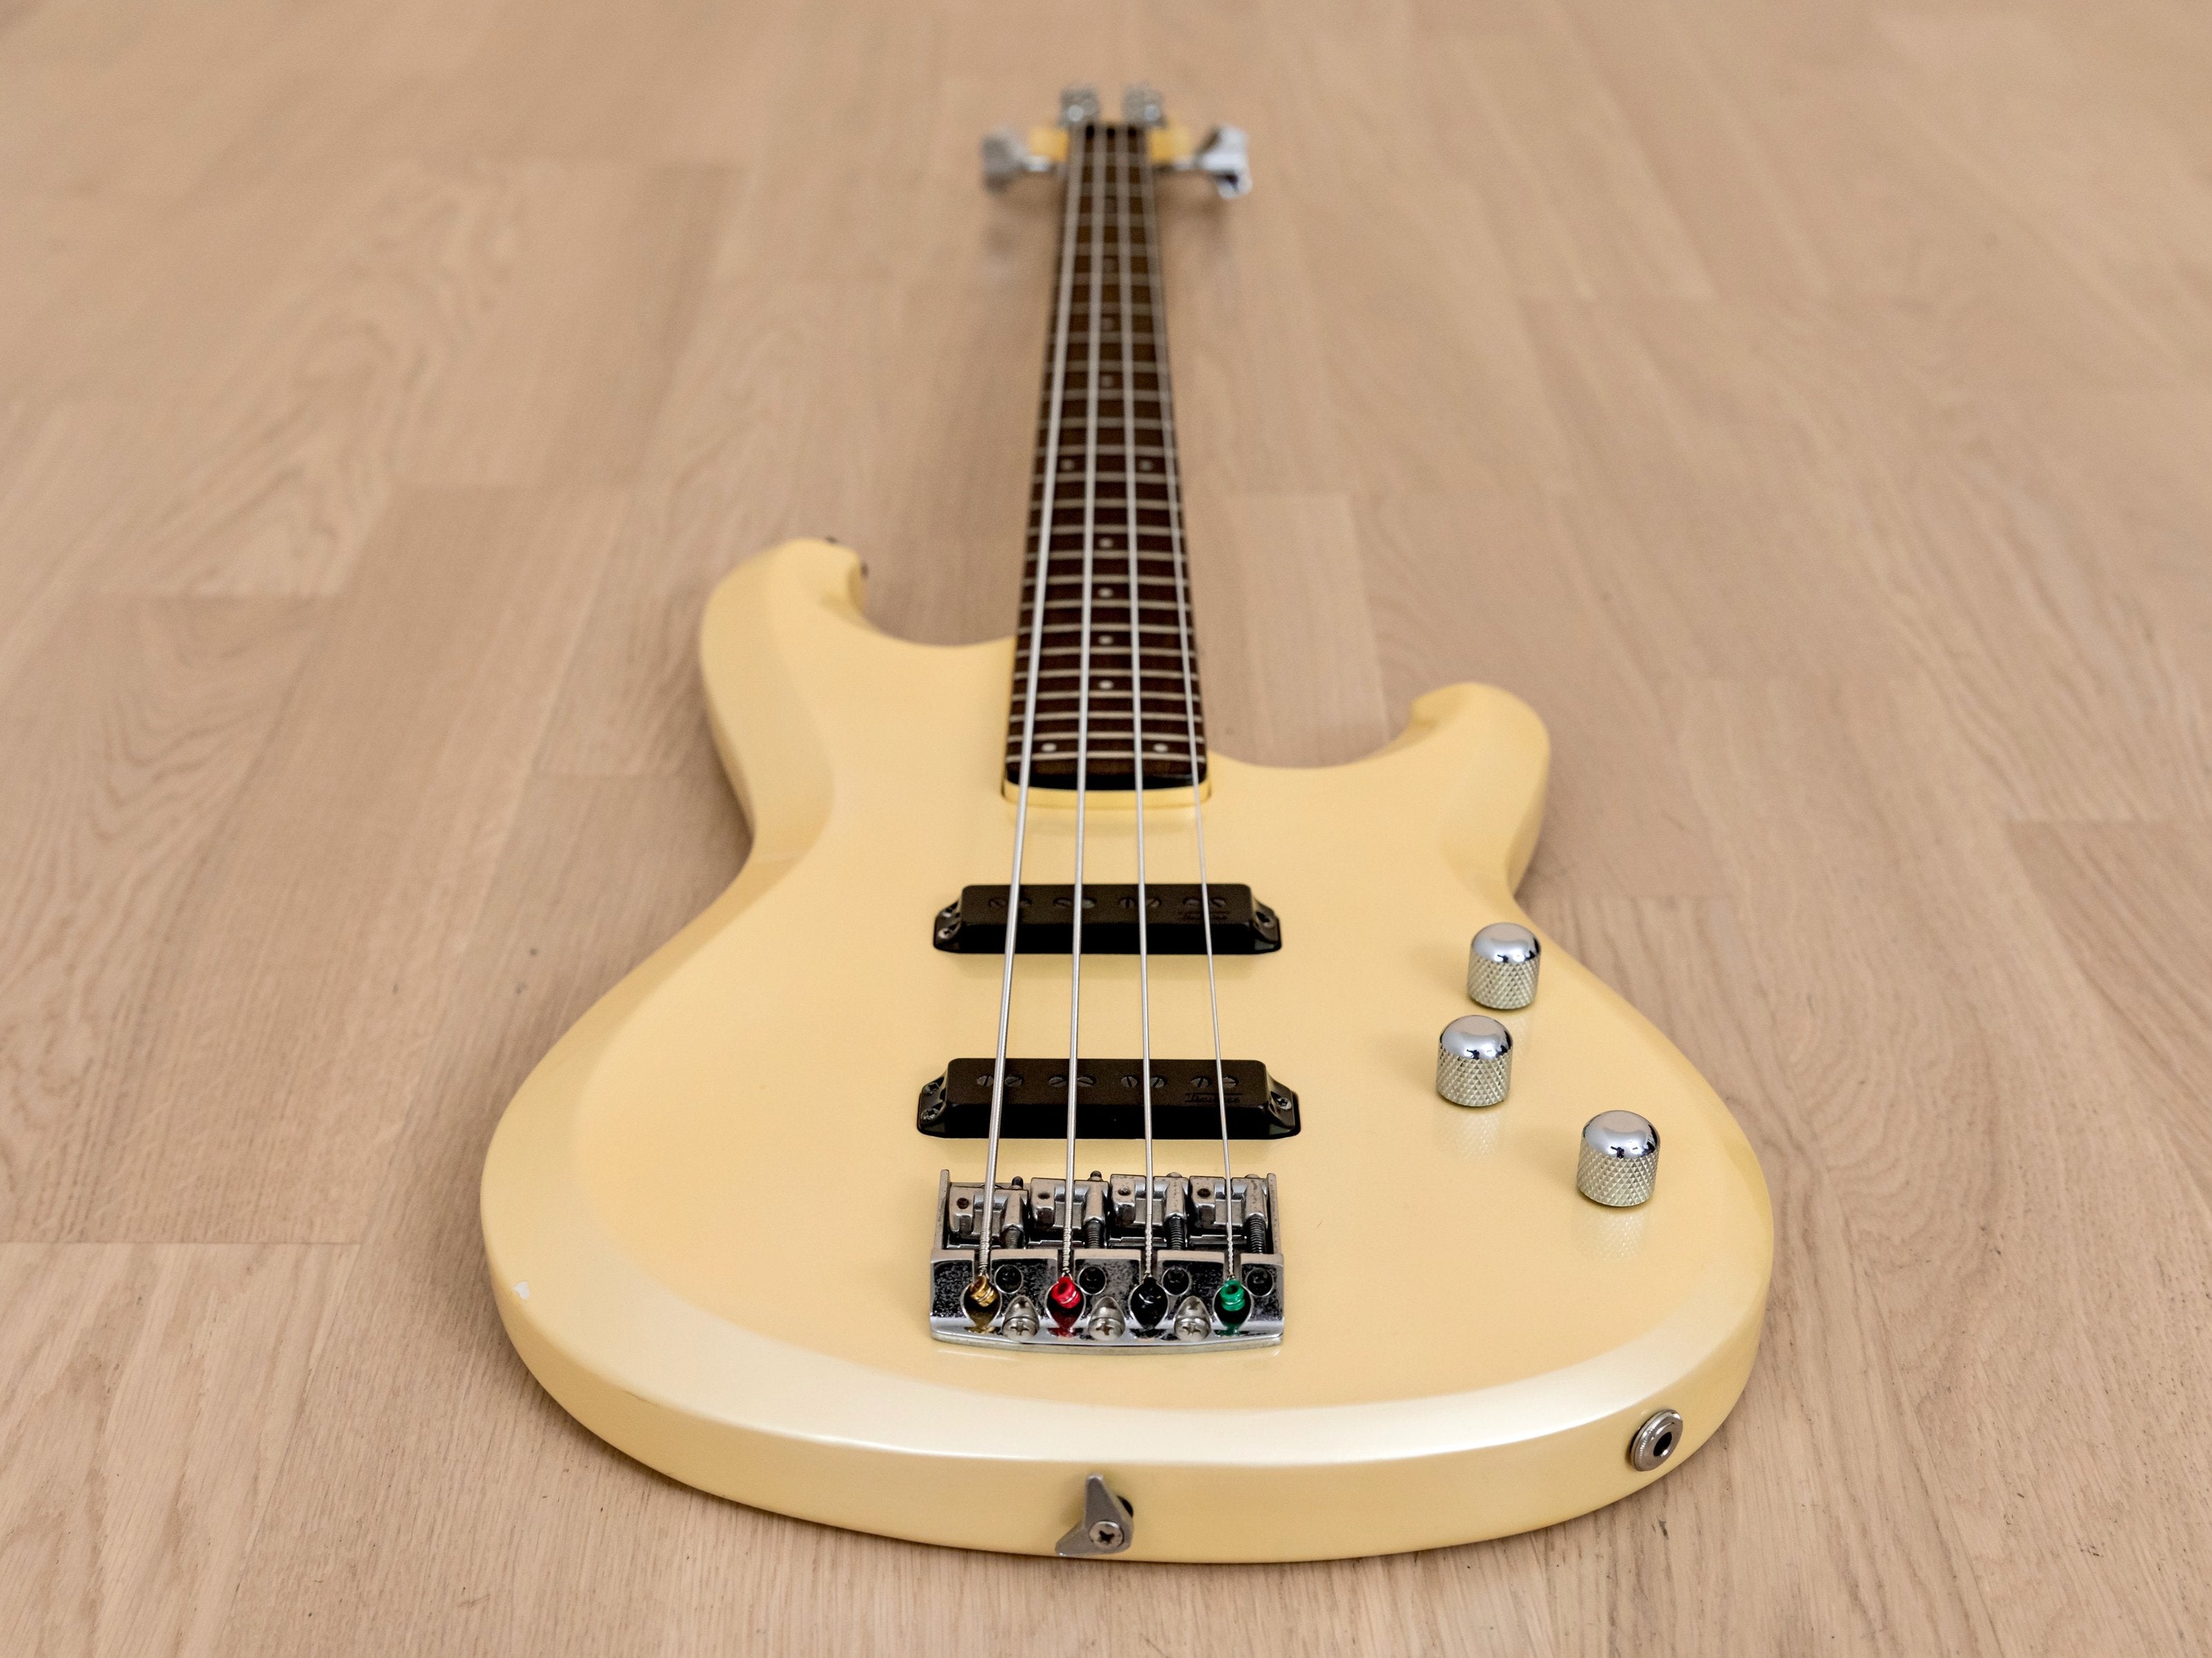 1986 Ibanez Roadstar Bass RB550 Vintage Bass Guitar Polar White, 100% Original, Japan Fujigen